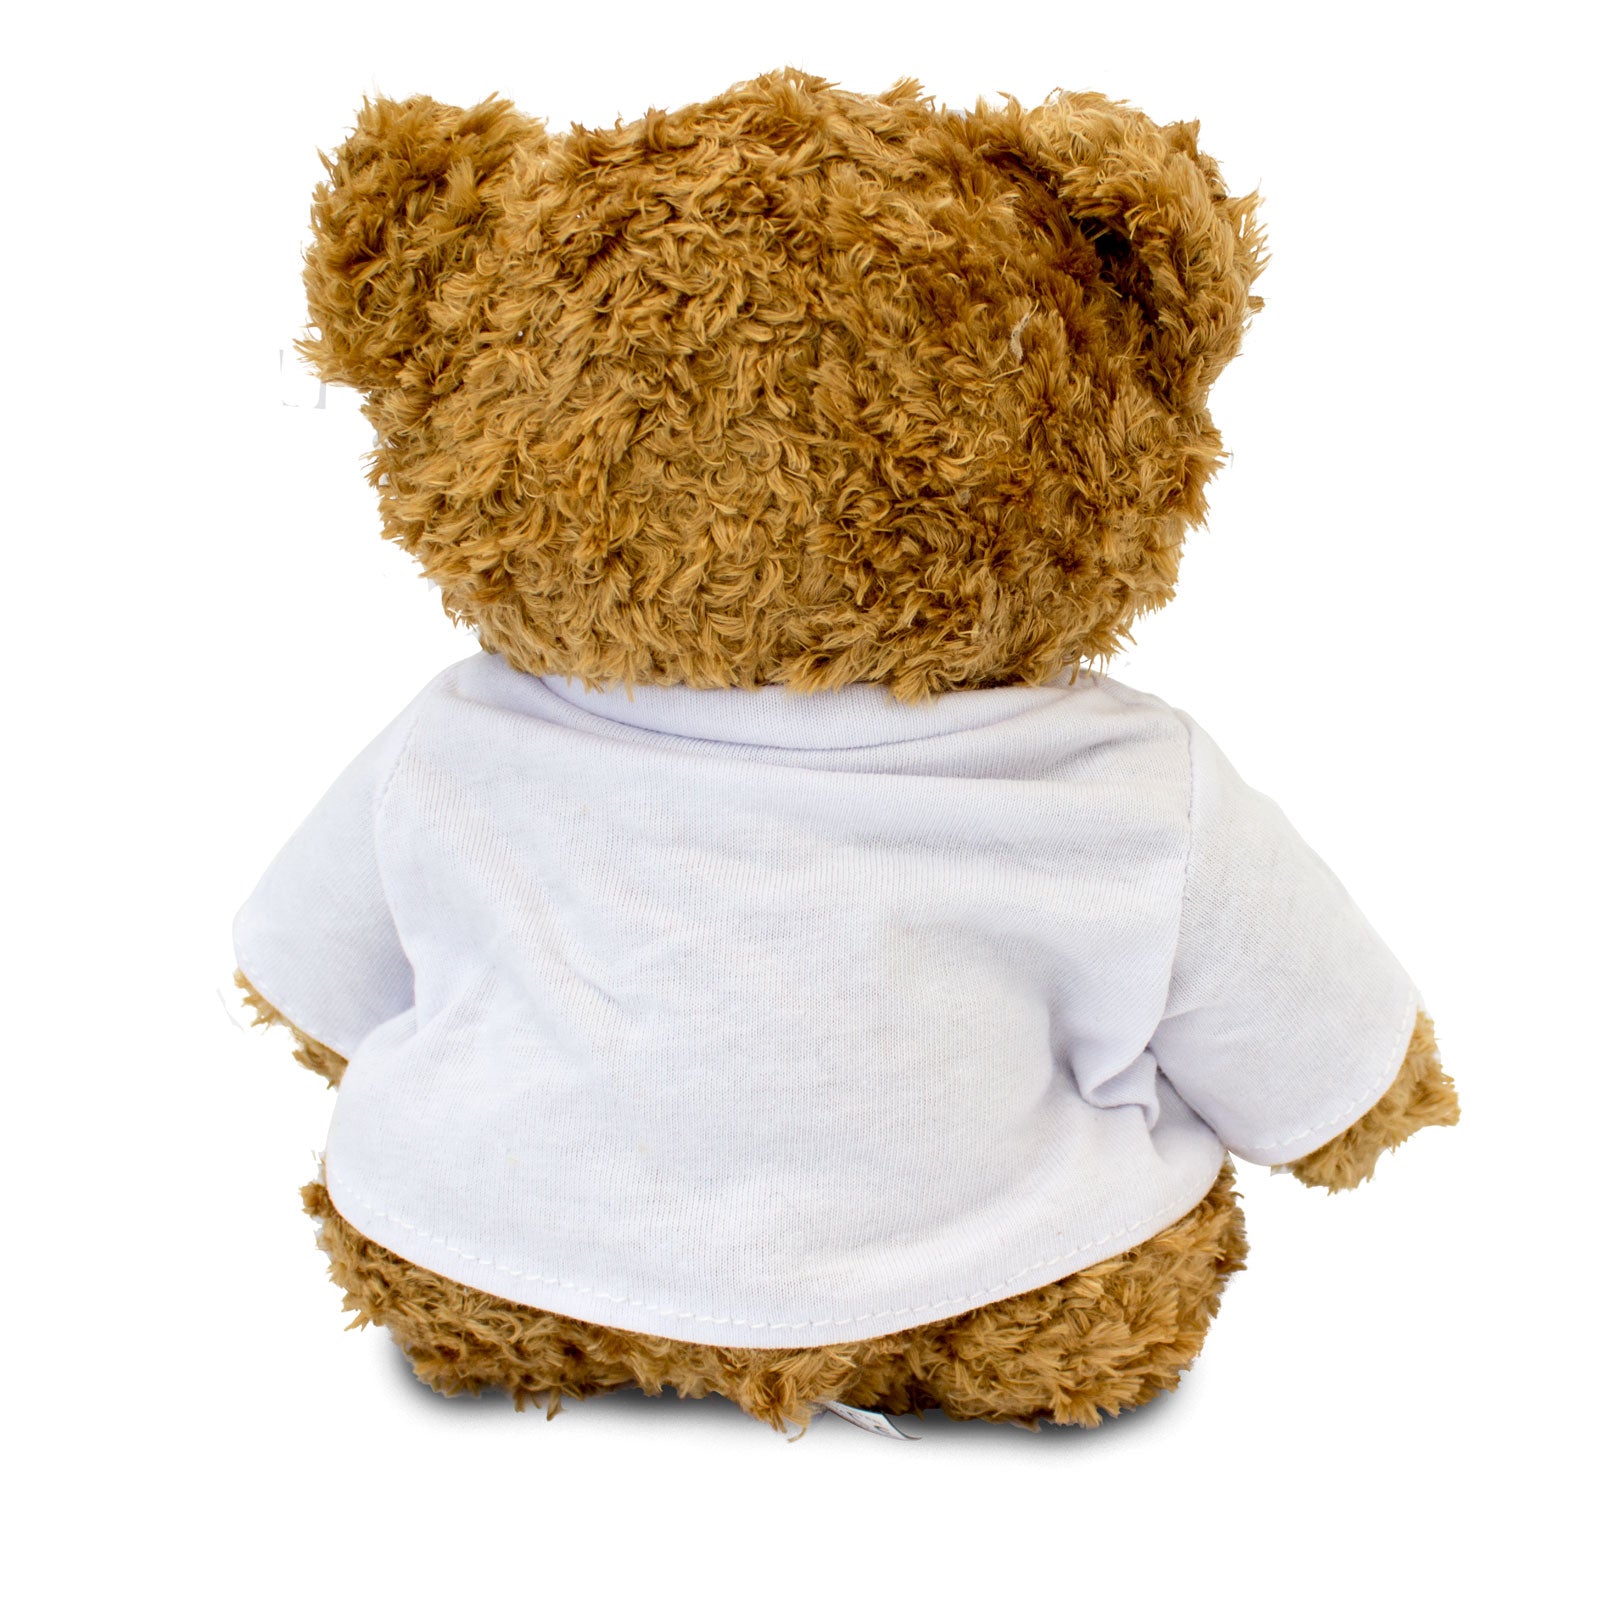 Get Well Soon Iman - Teddy Bear